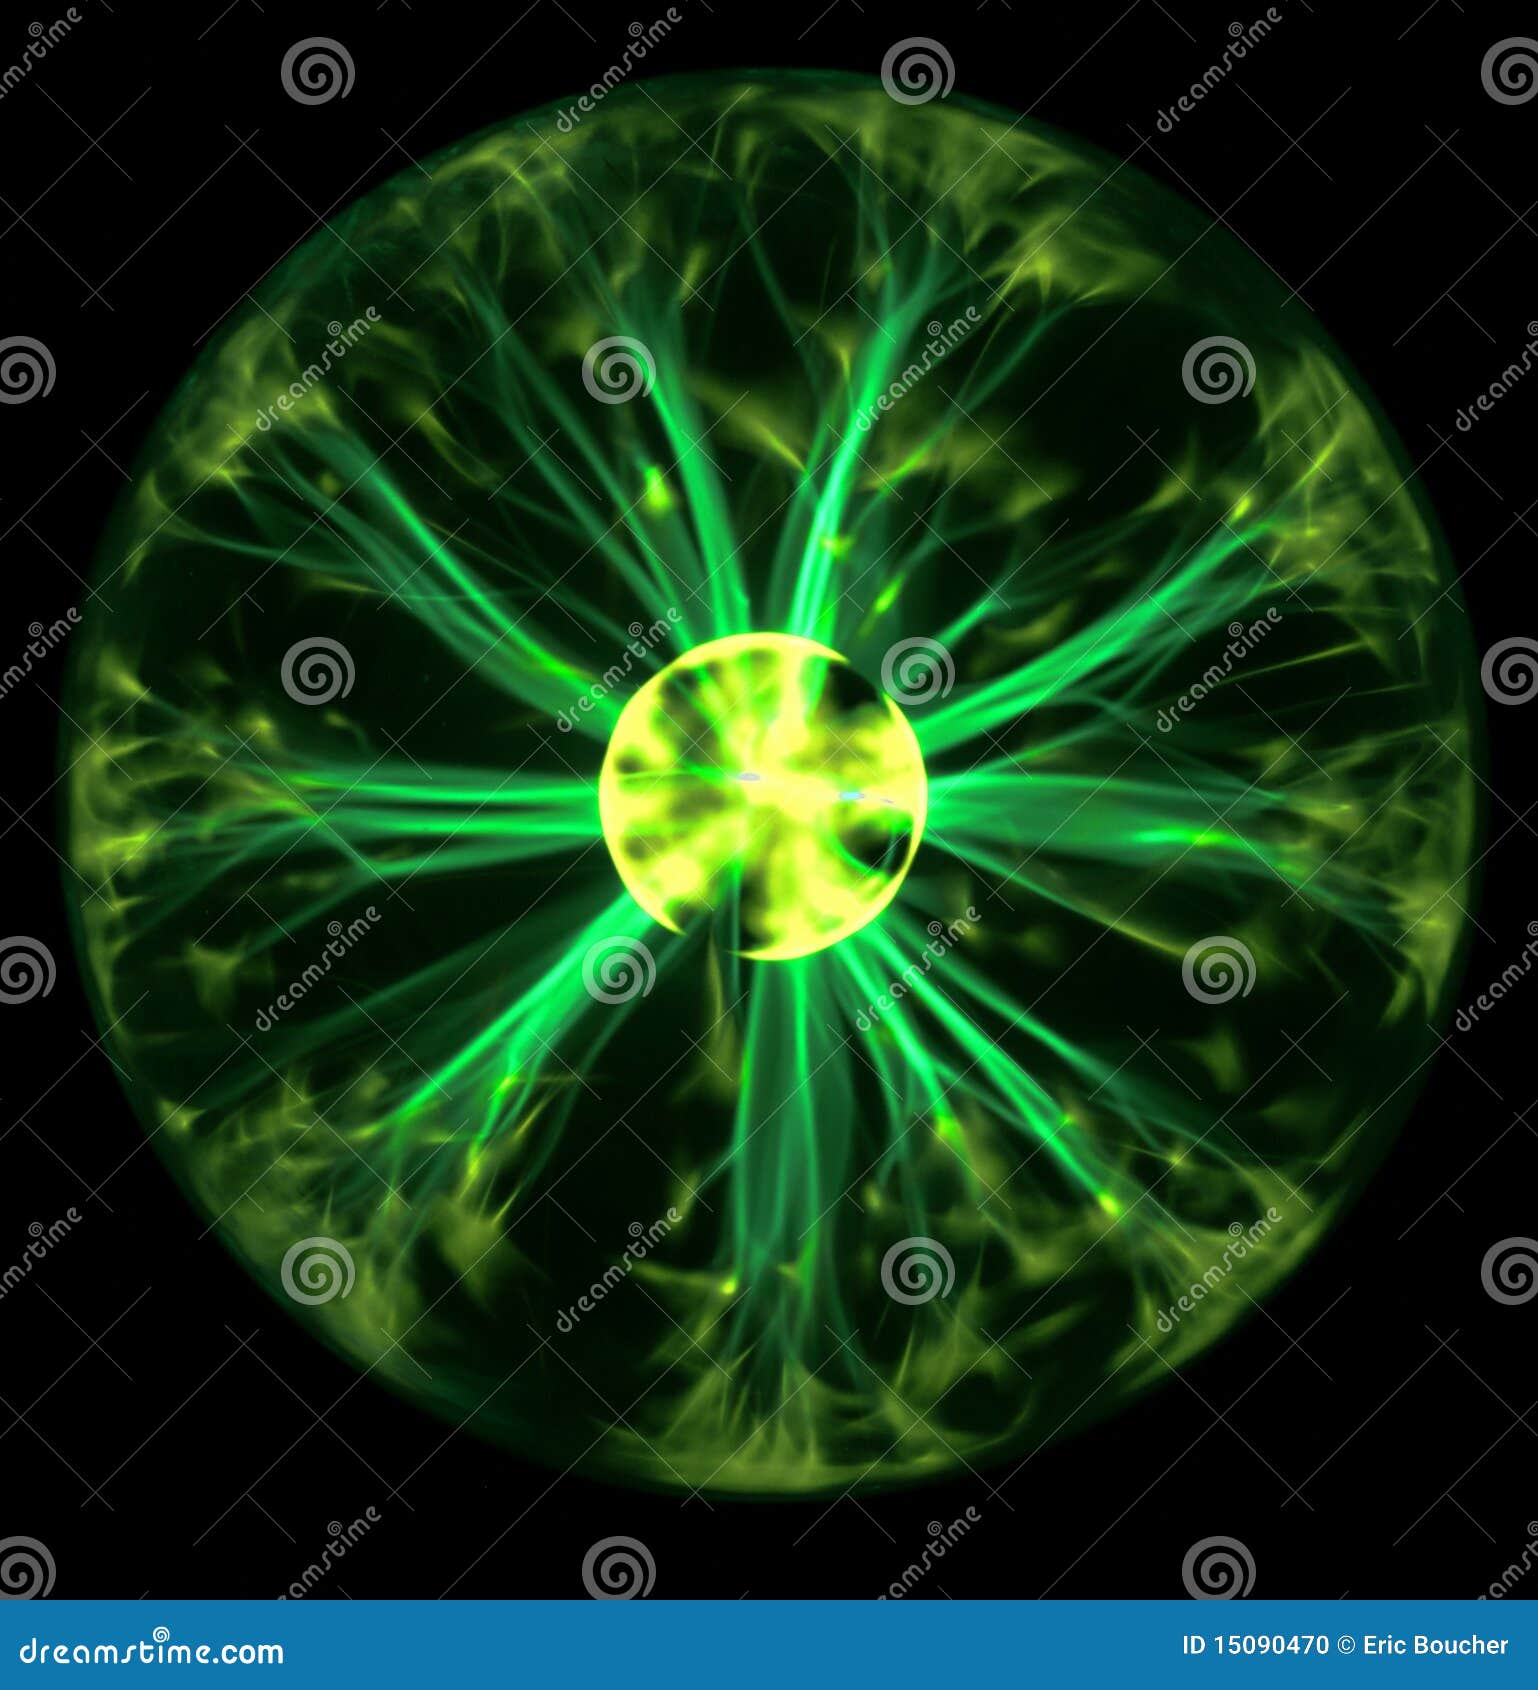 green plasma ball